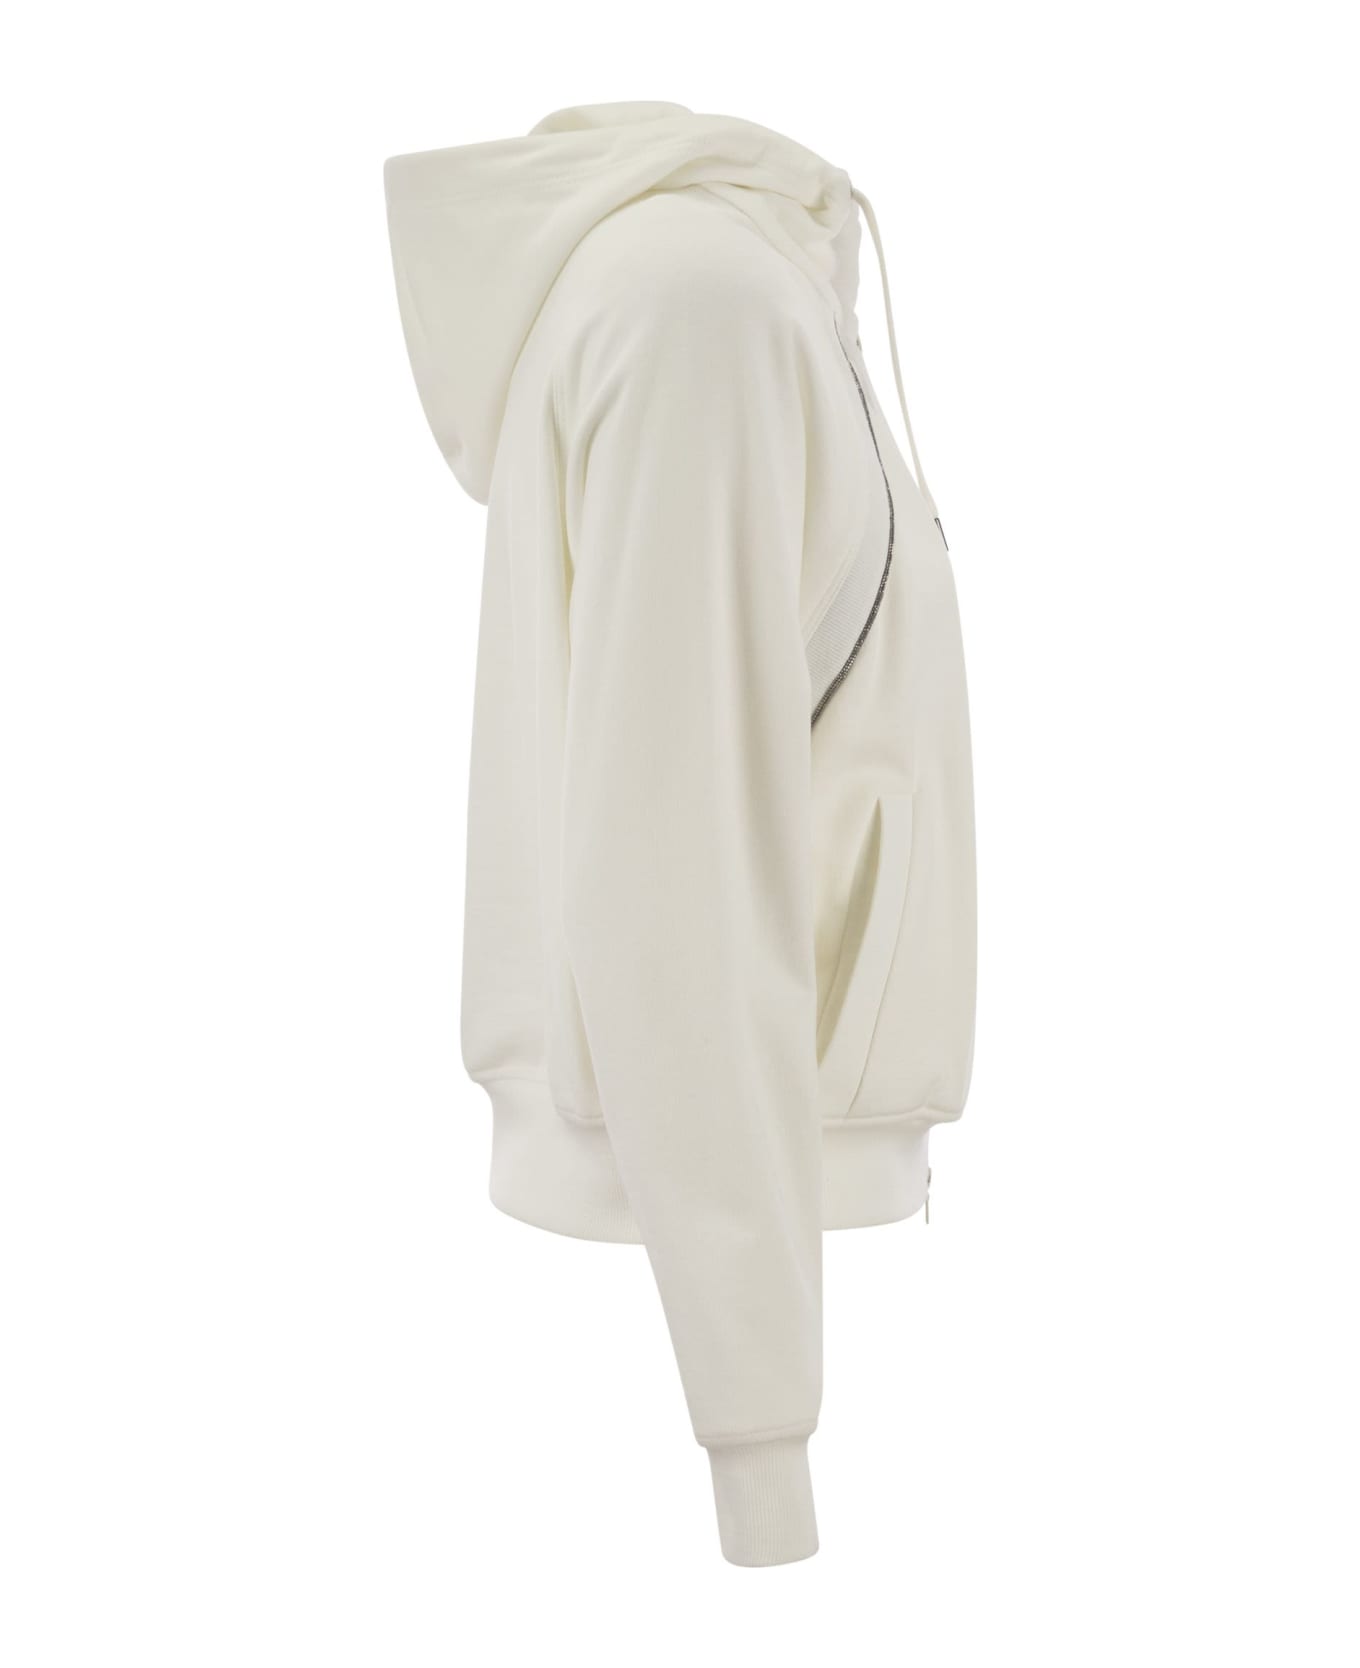 Brunello Cucinelli Smooth Cotton Fleece Hooded Topwear - White ジャケット